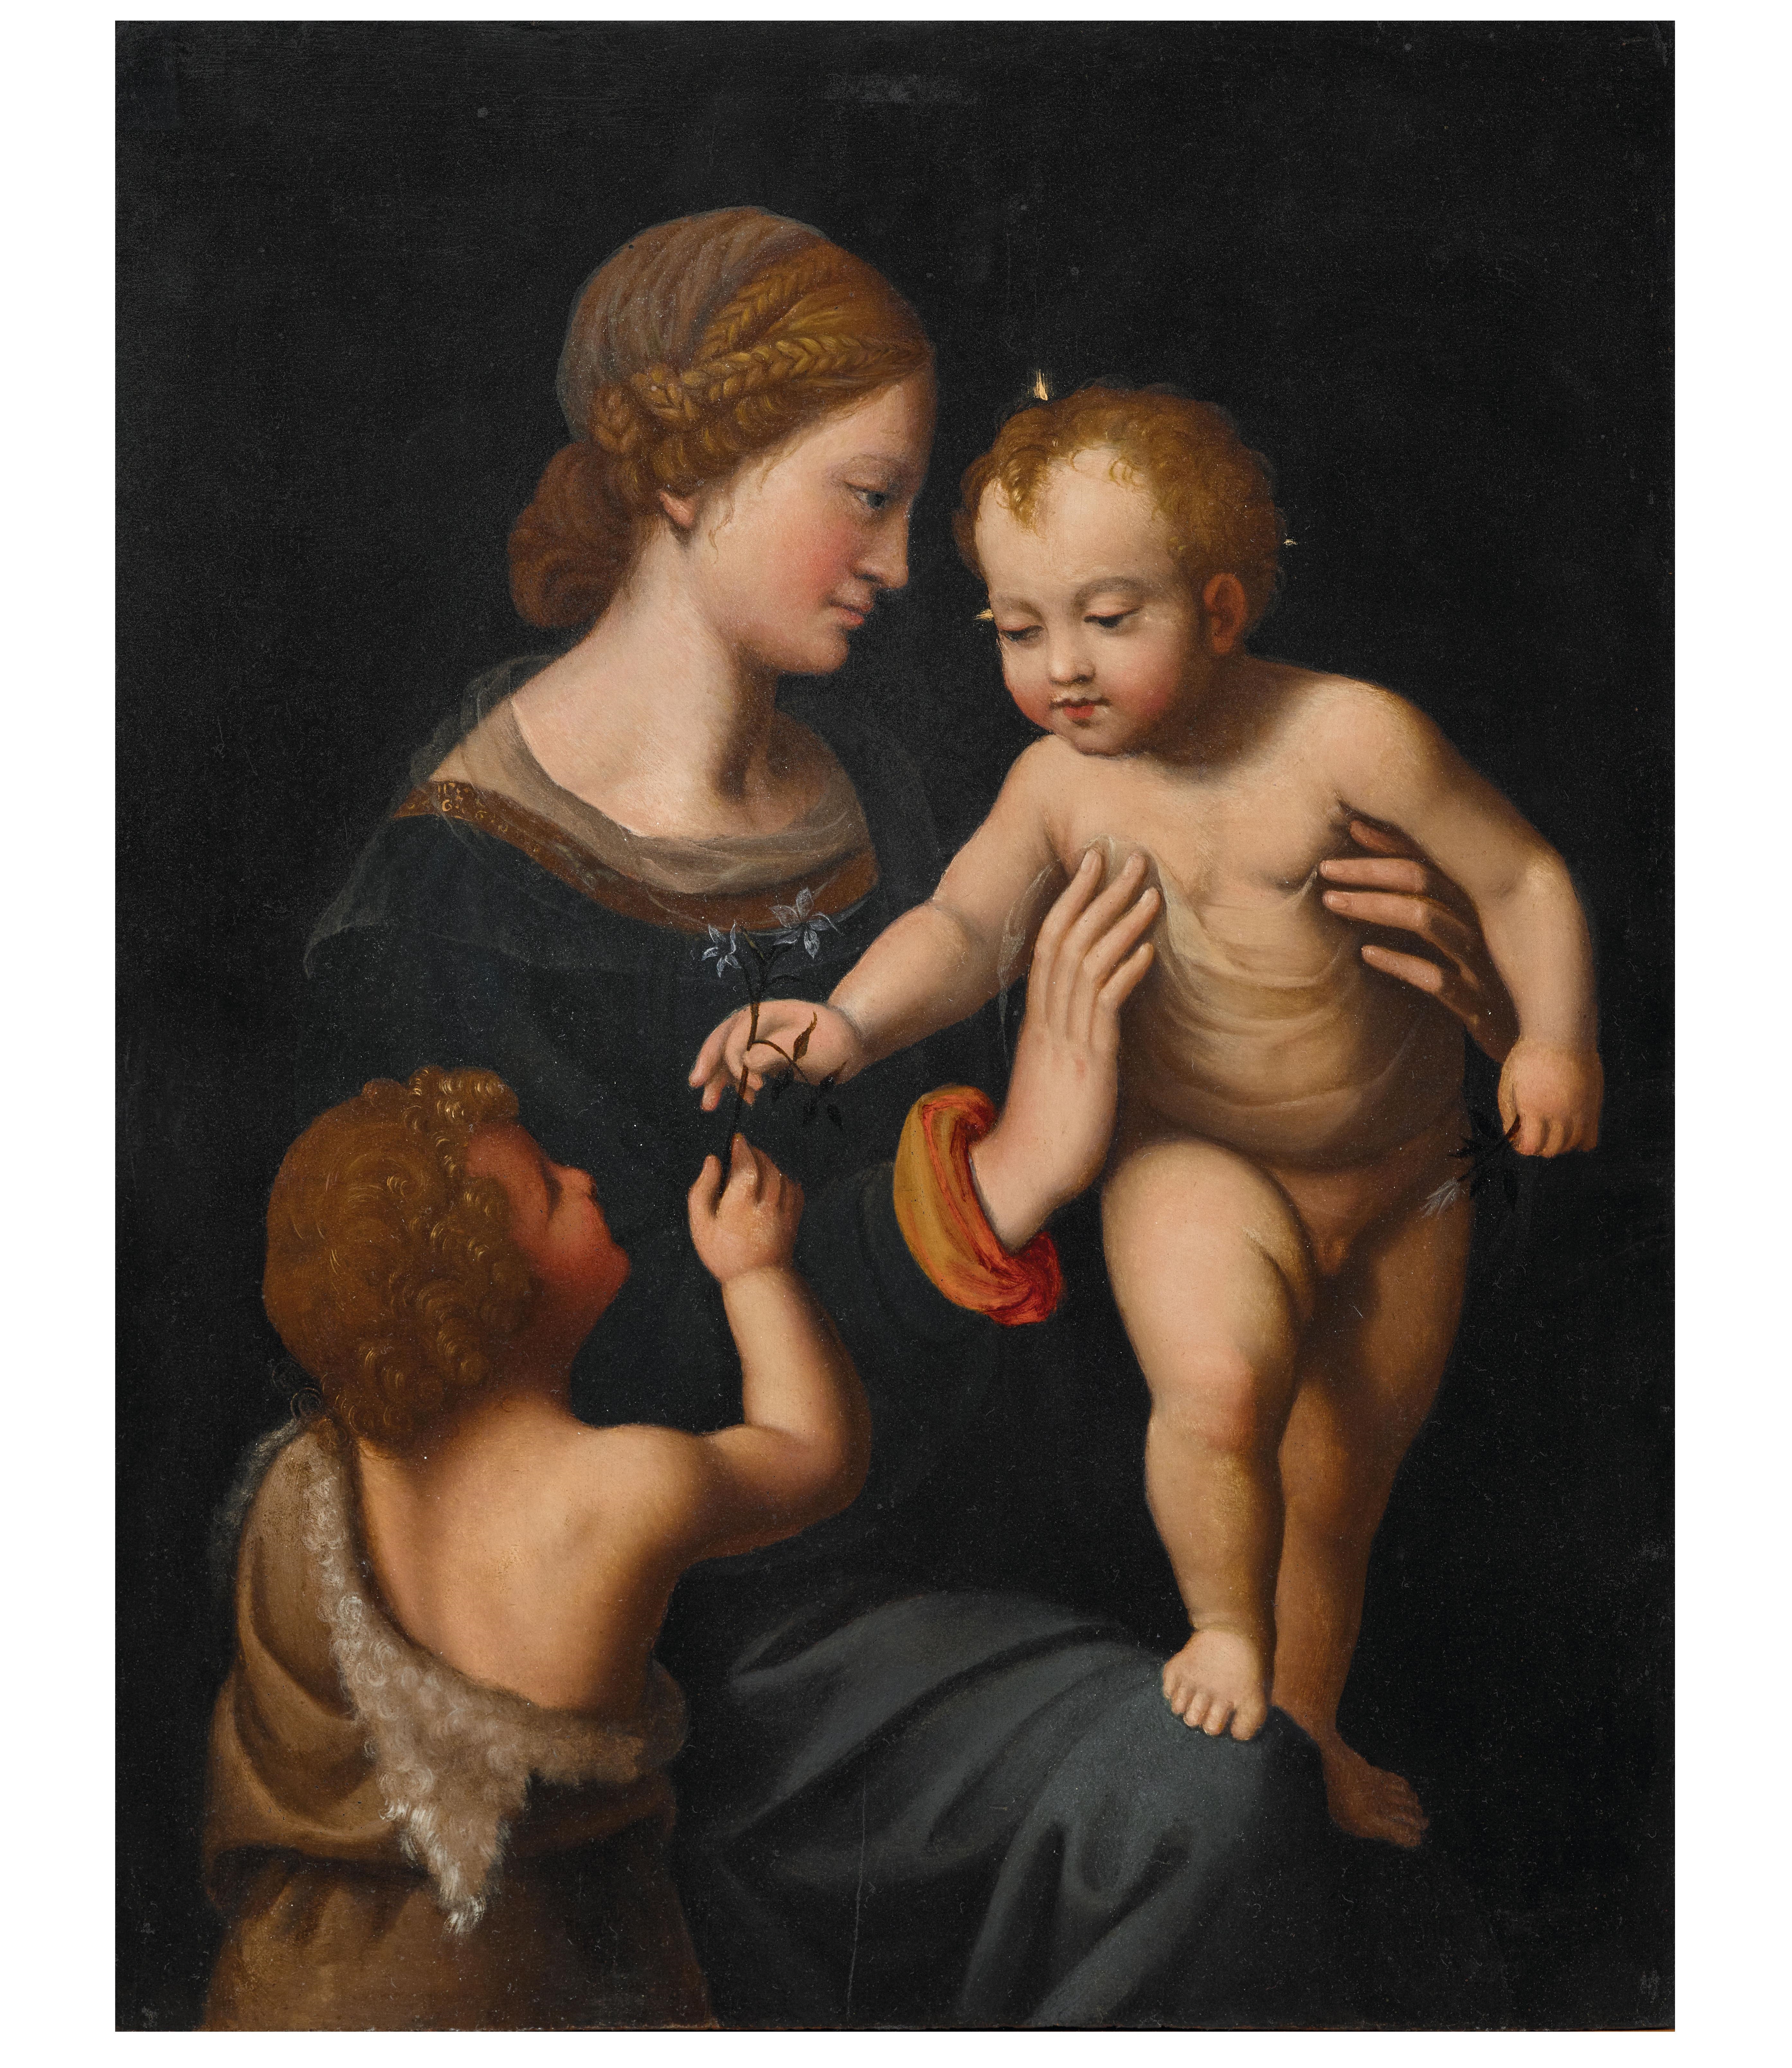 (Dumenza Luino circa 1480–1532 Milan) by Leonardo da Vinci, 1480